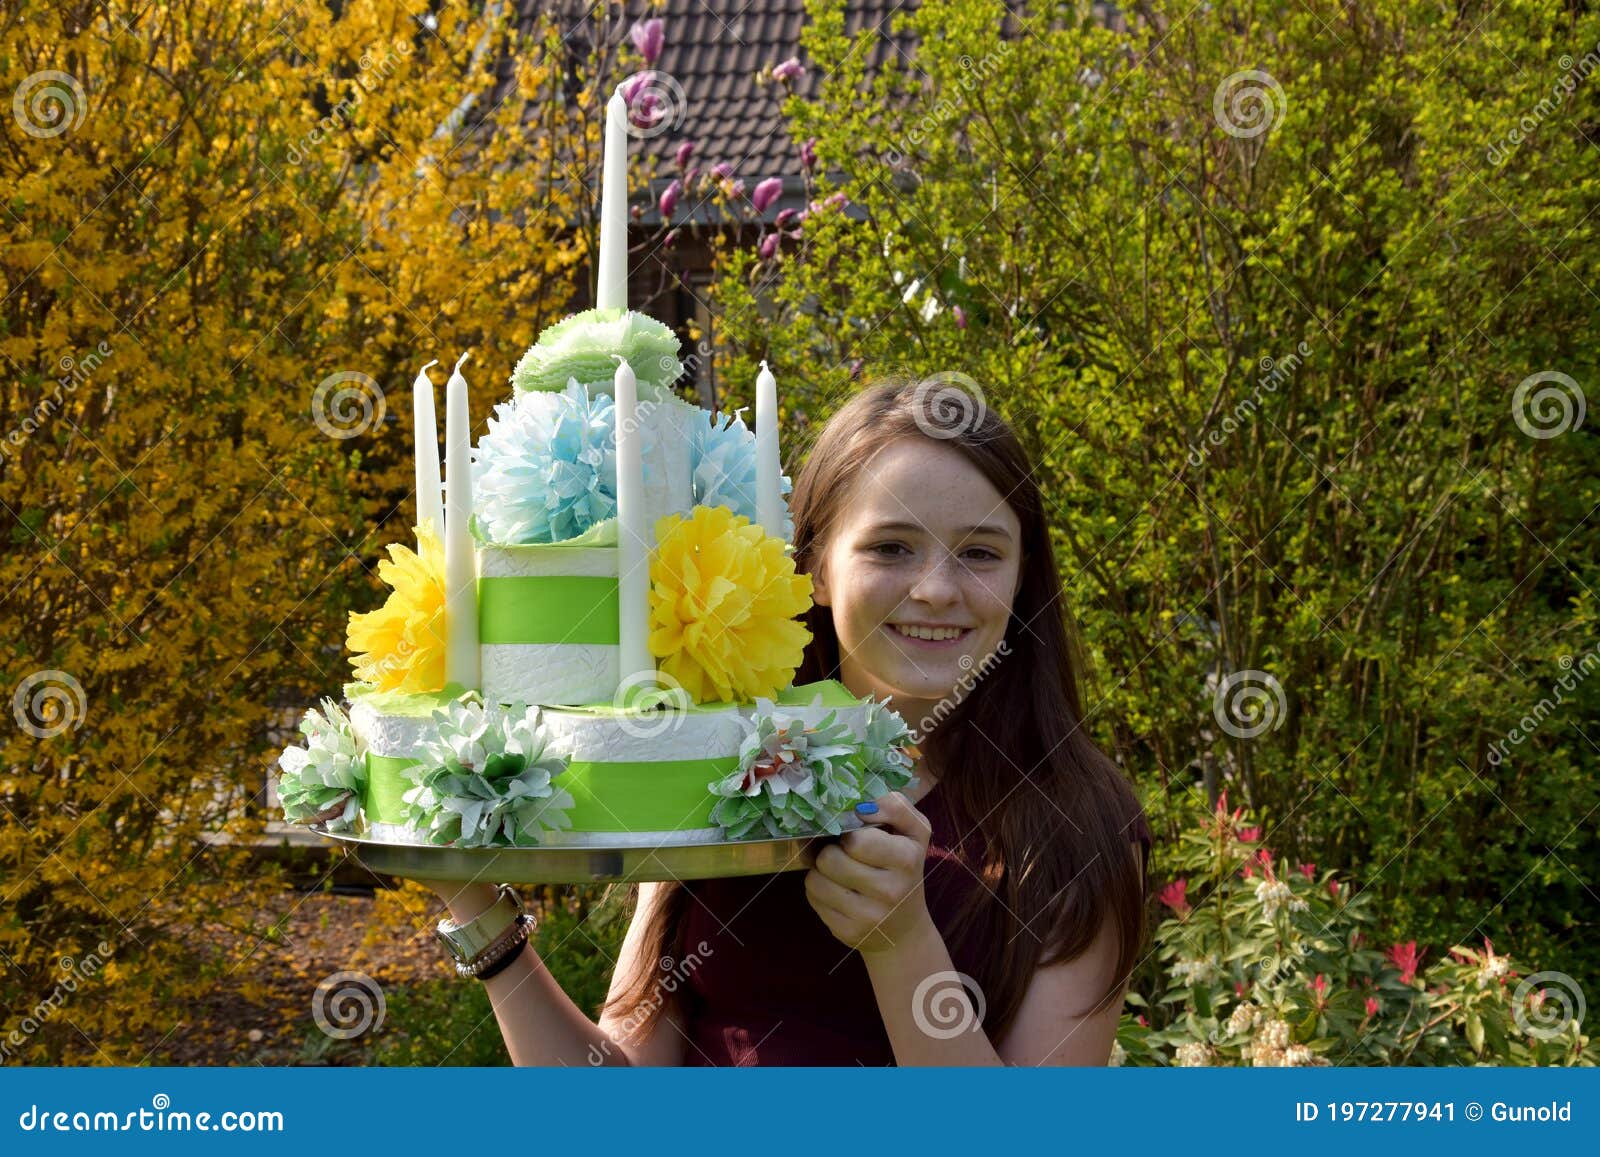 girl brings birthday cake made of toilet paper